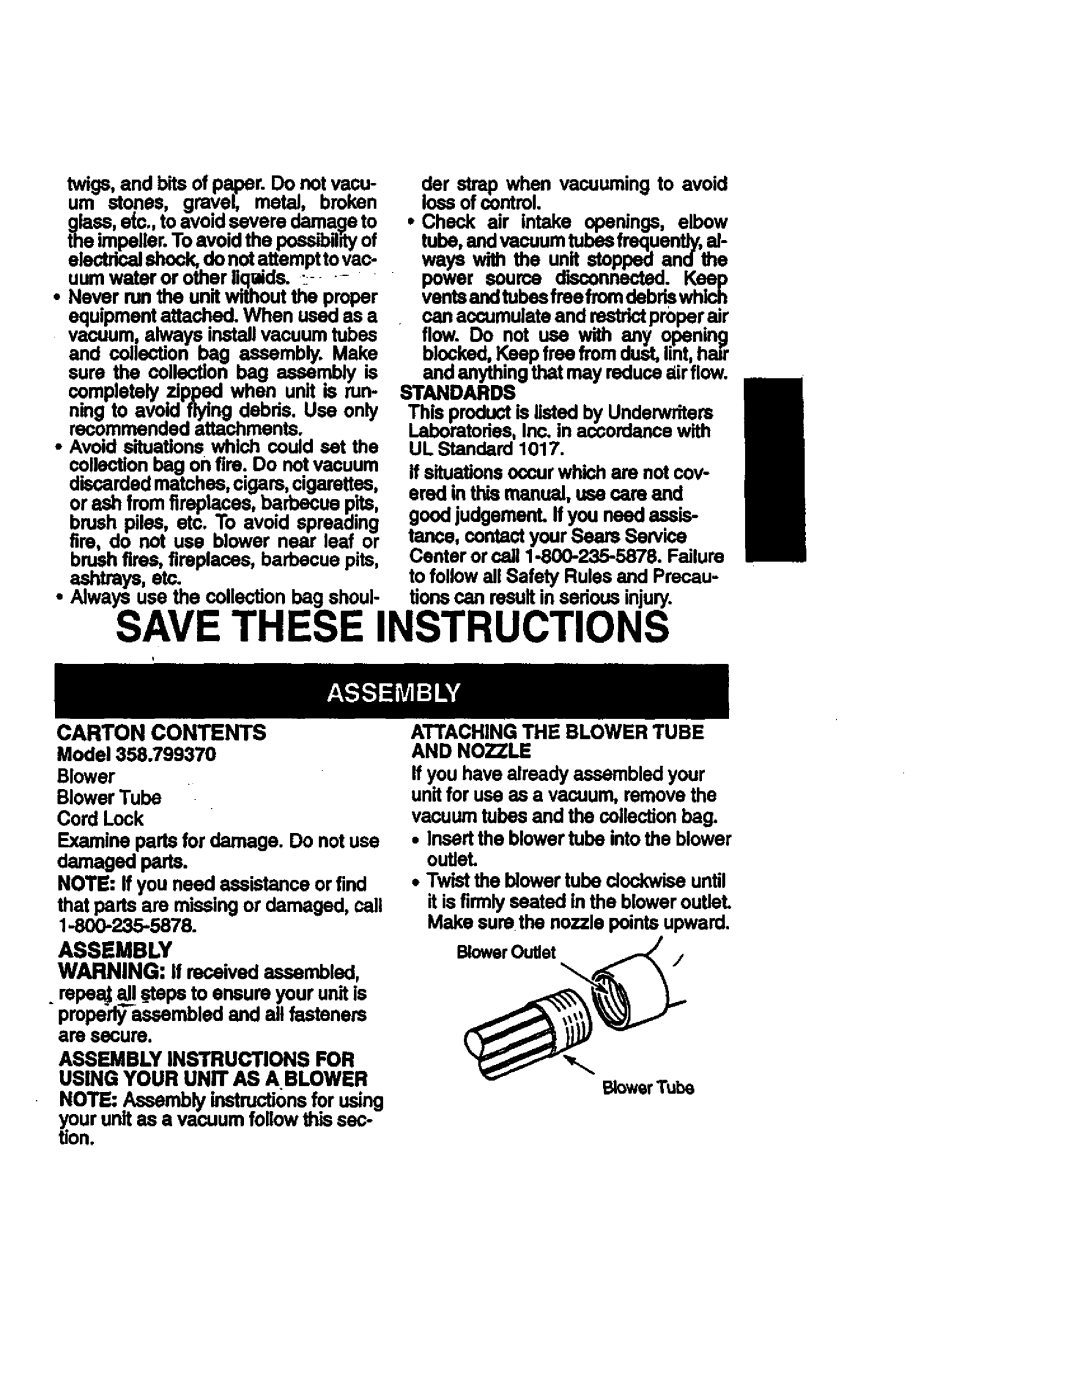 Univex 358.799370 manual Save These Instructions, twigs,andbitsofpaper.Donotvacu, um stones, gravel, metal, broken 